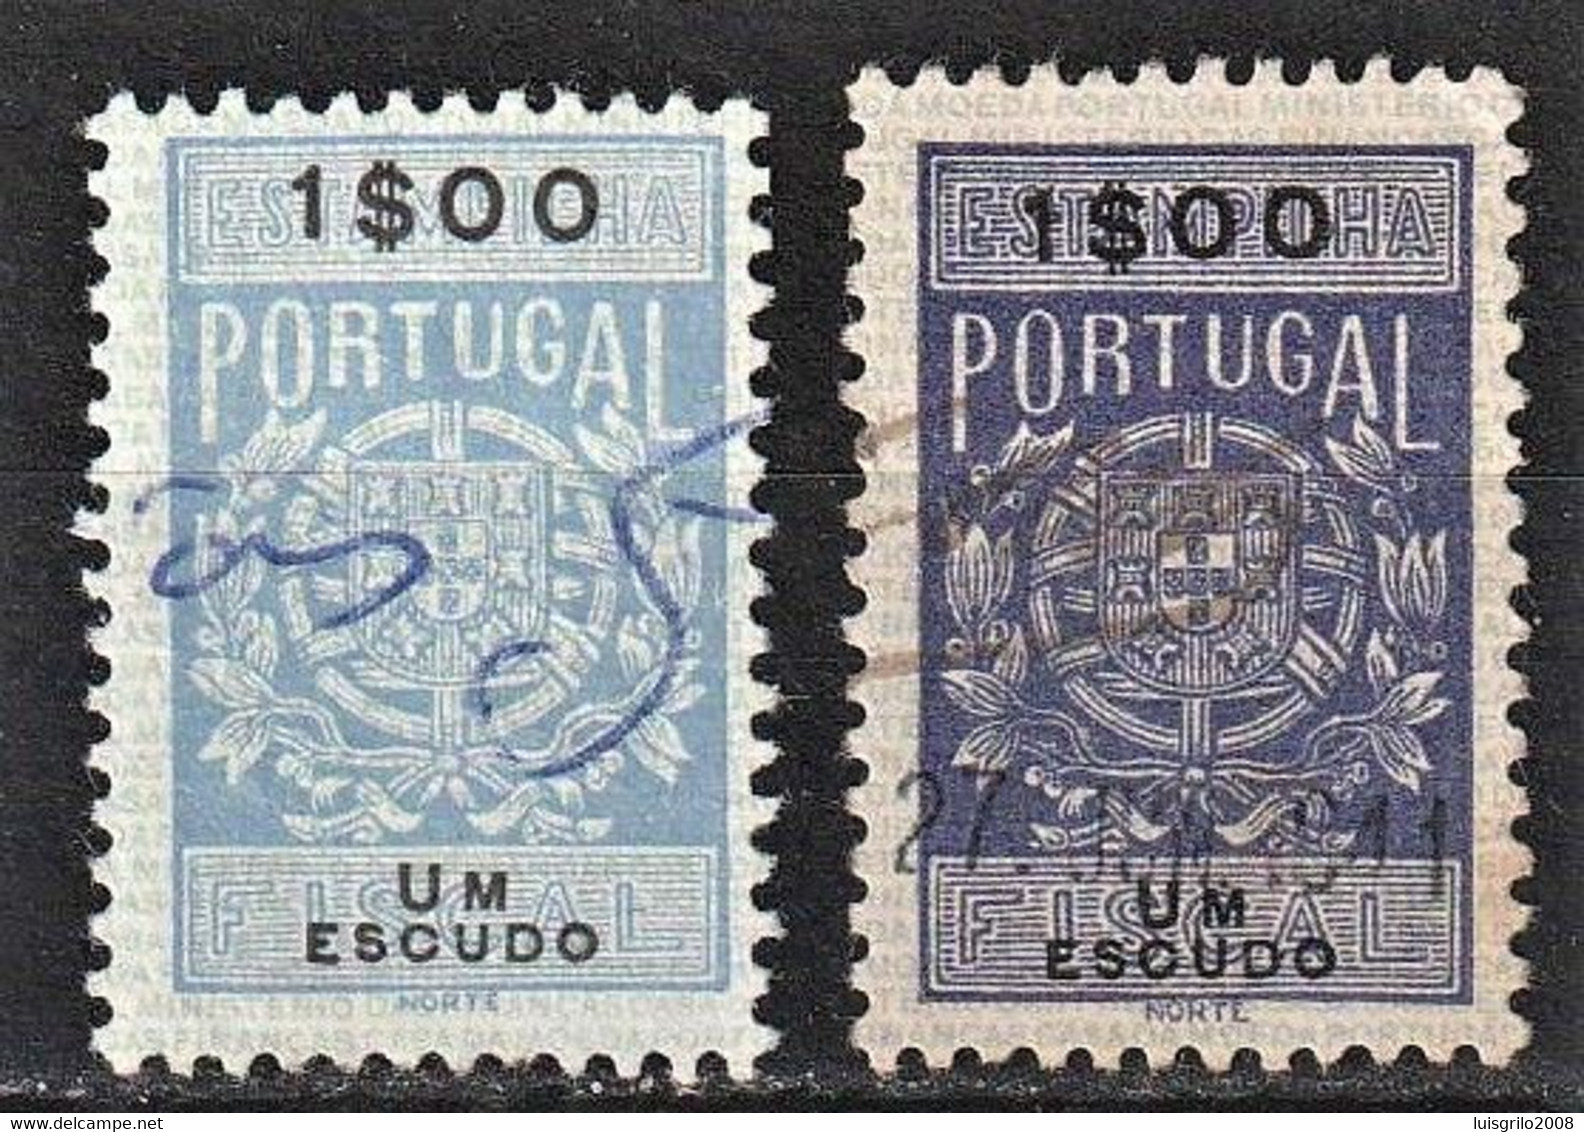 VERY RARE STAMP - Fiscal/ Revenue, Portugal 1940 - Estampilha Fiscal -|- 1$00 - DIFFERENT COLOR - Usati